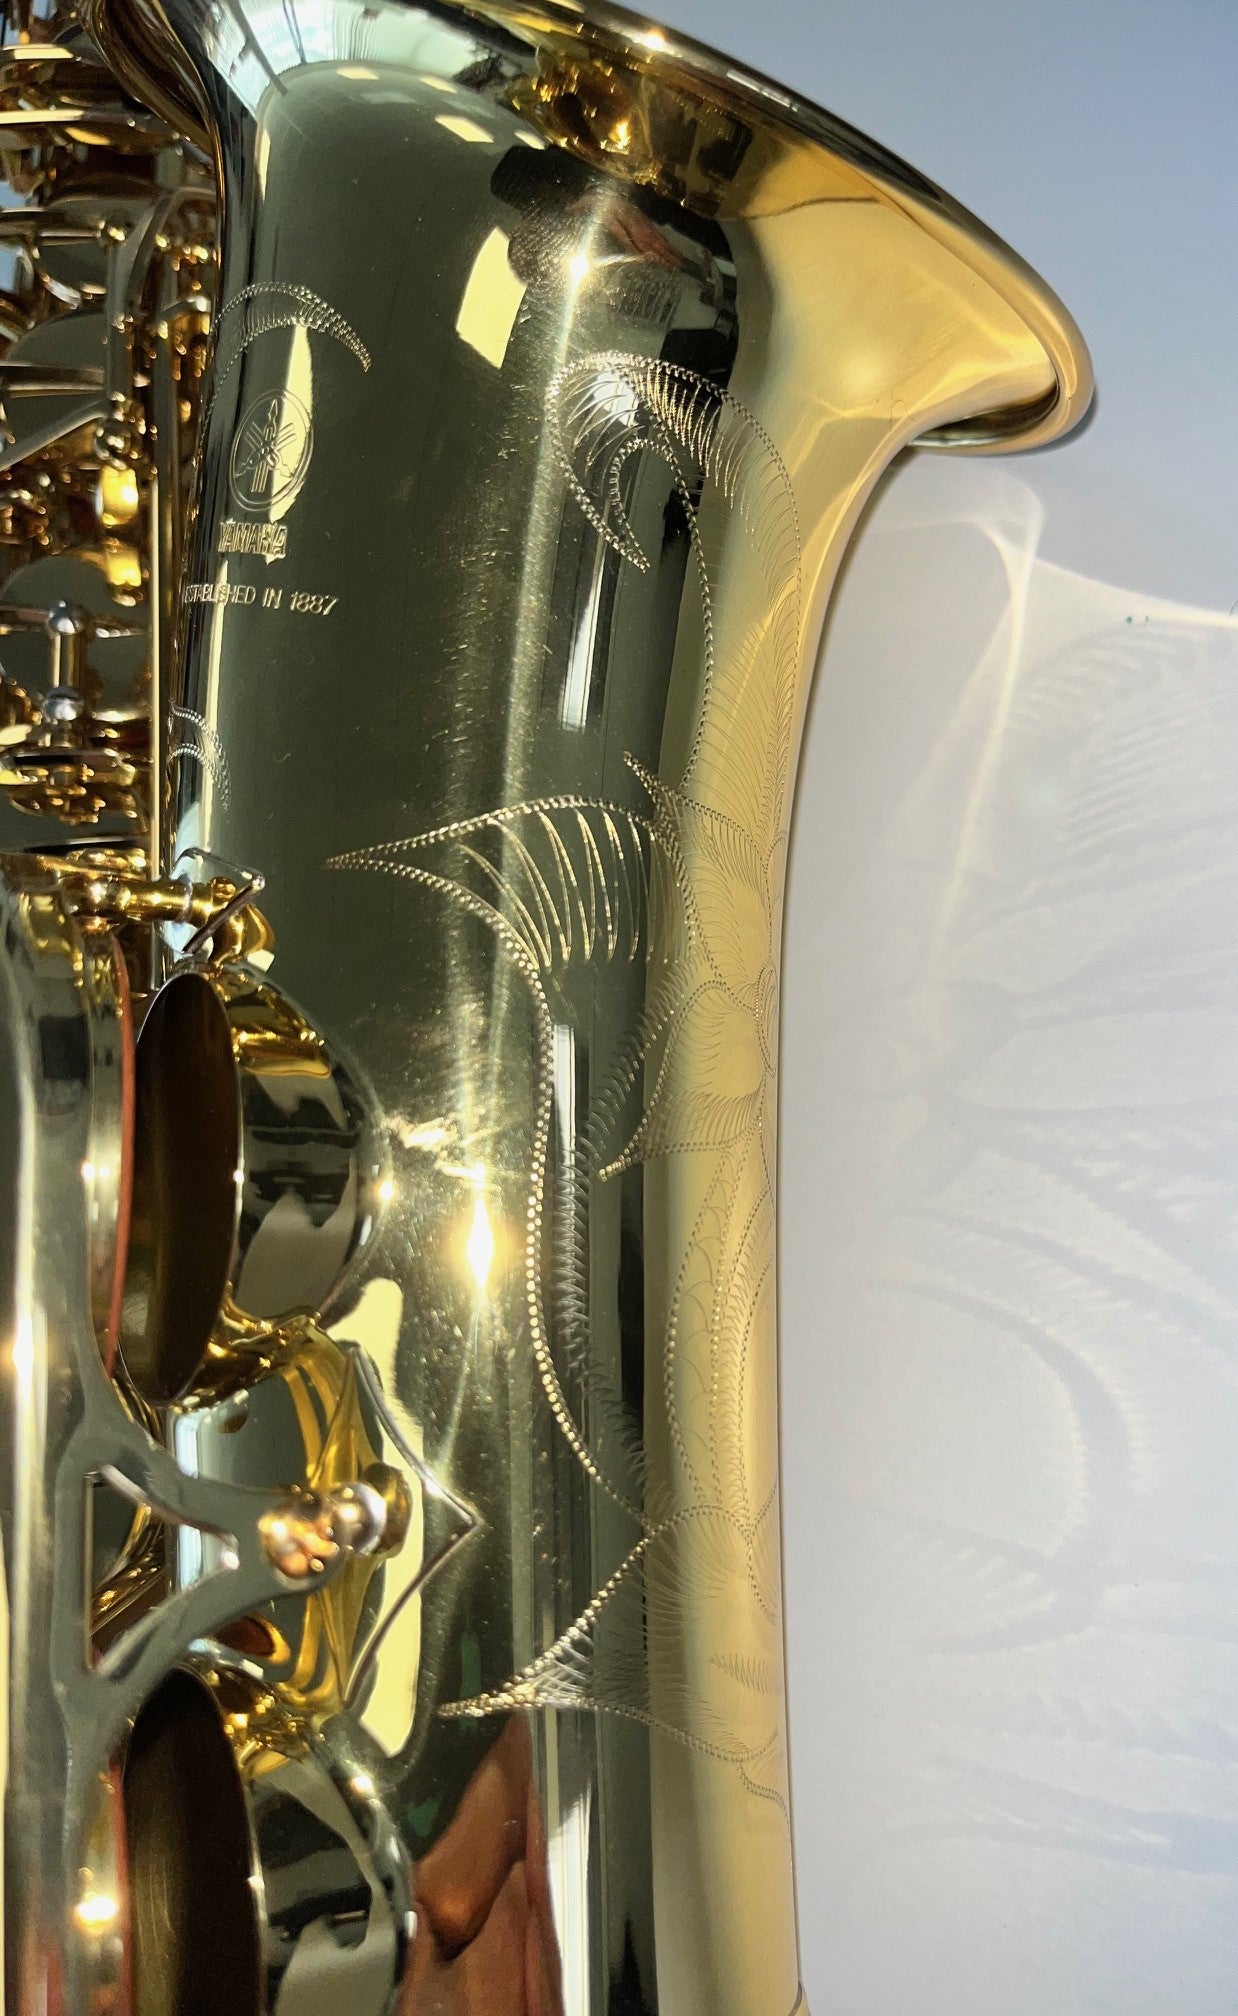 Yamaha YAS62 (02) Alto Saxophone (Pre owned)